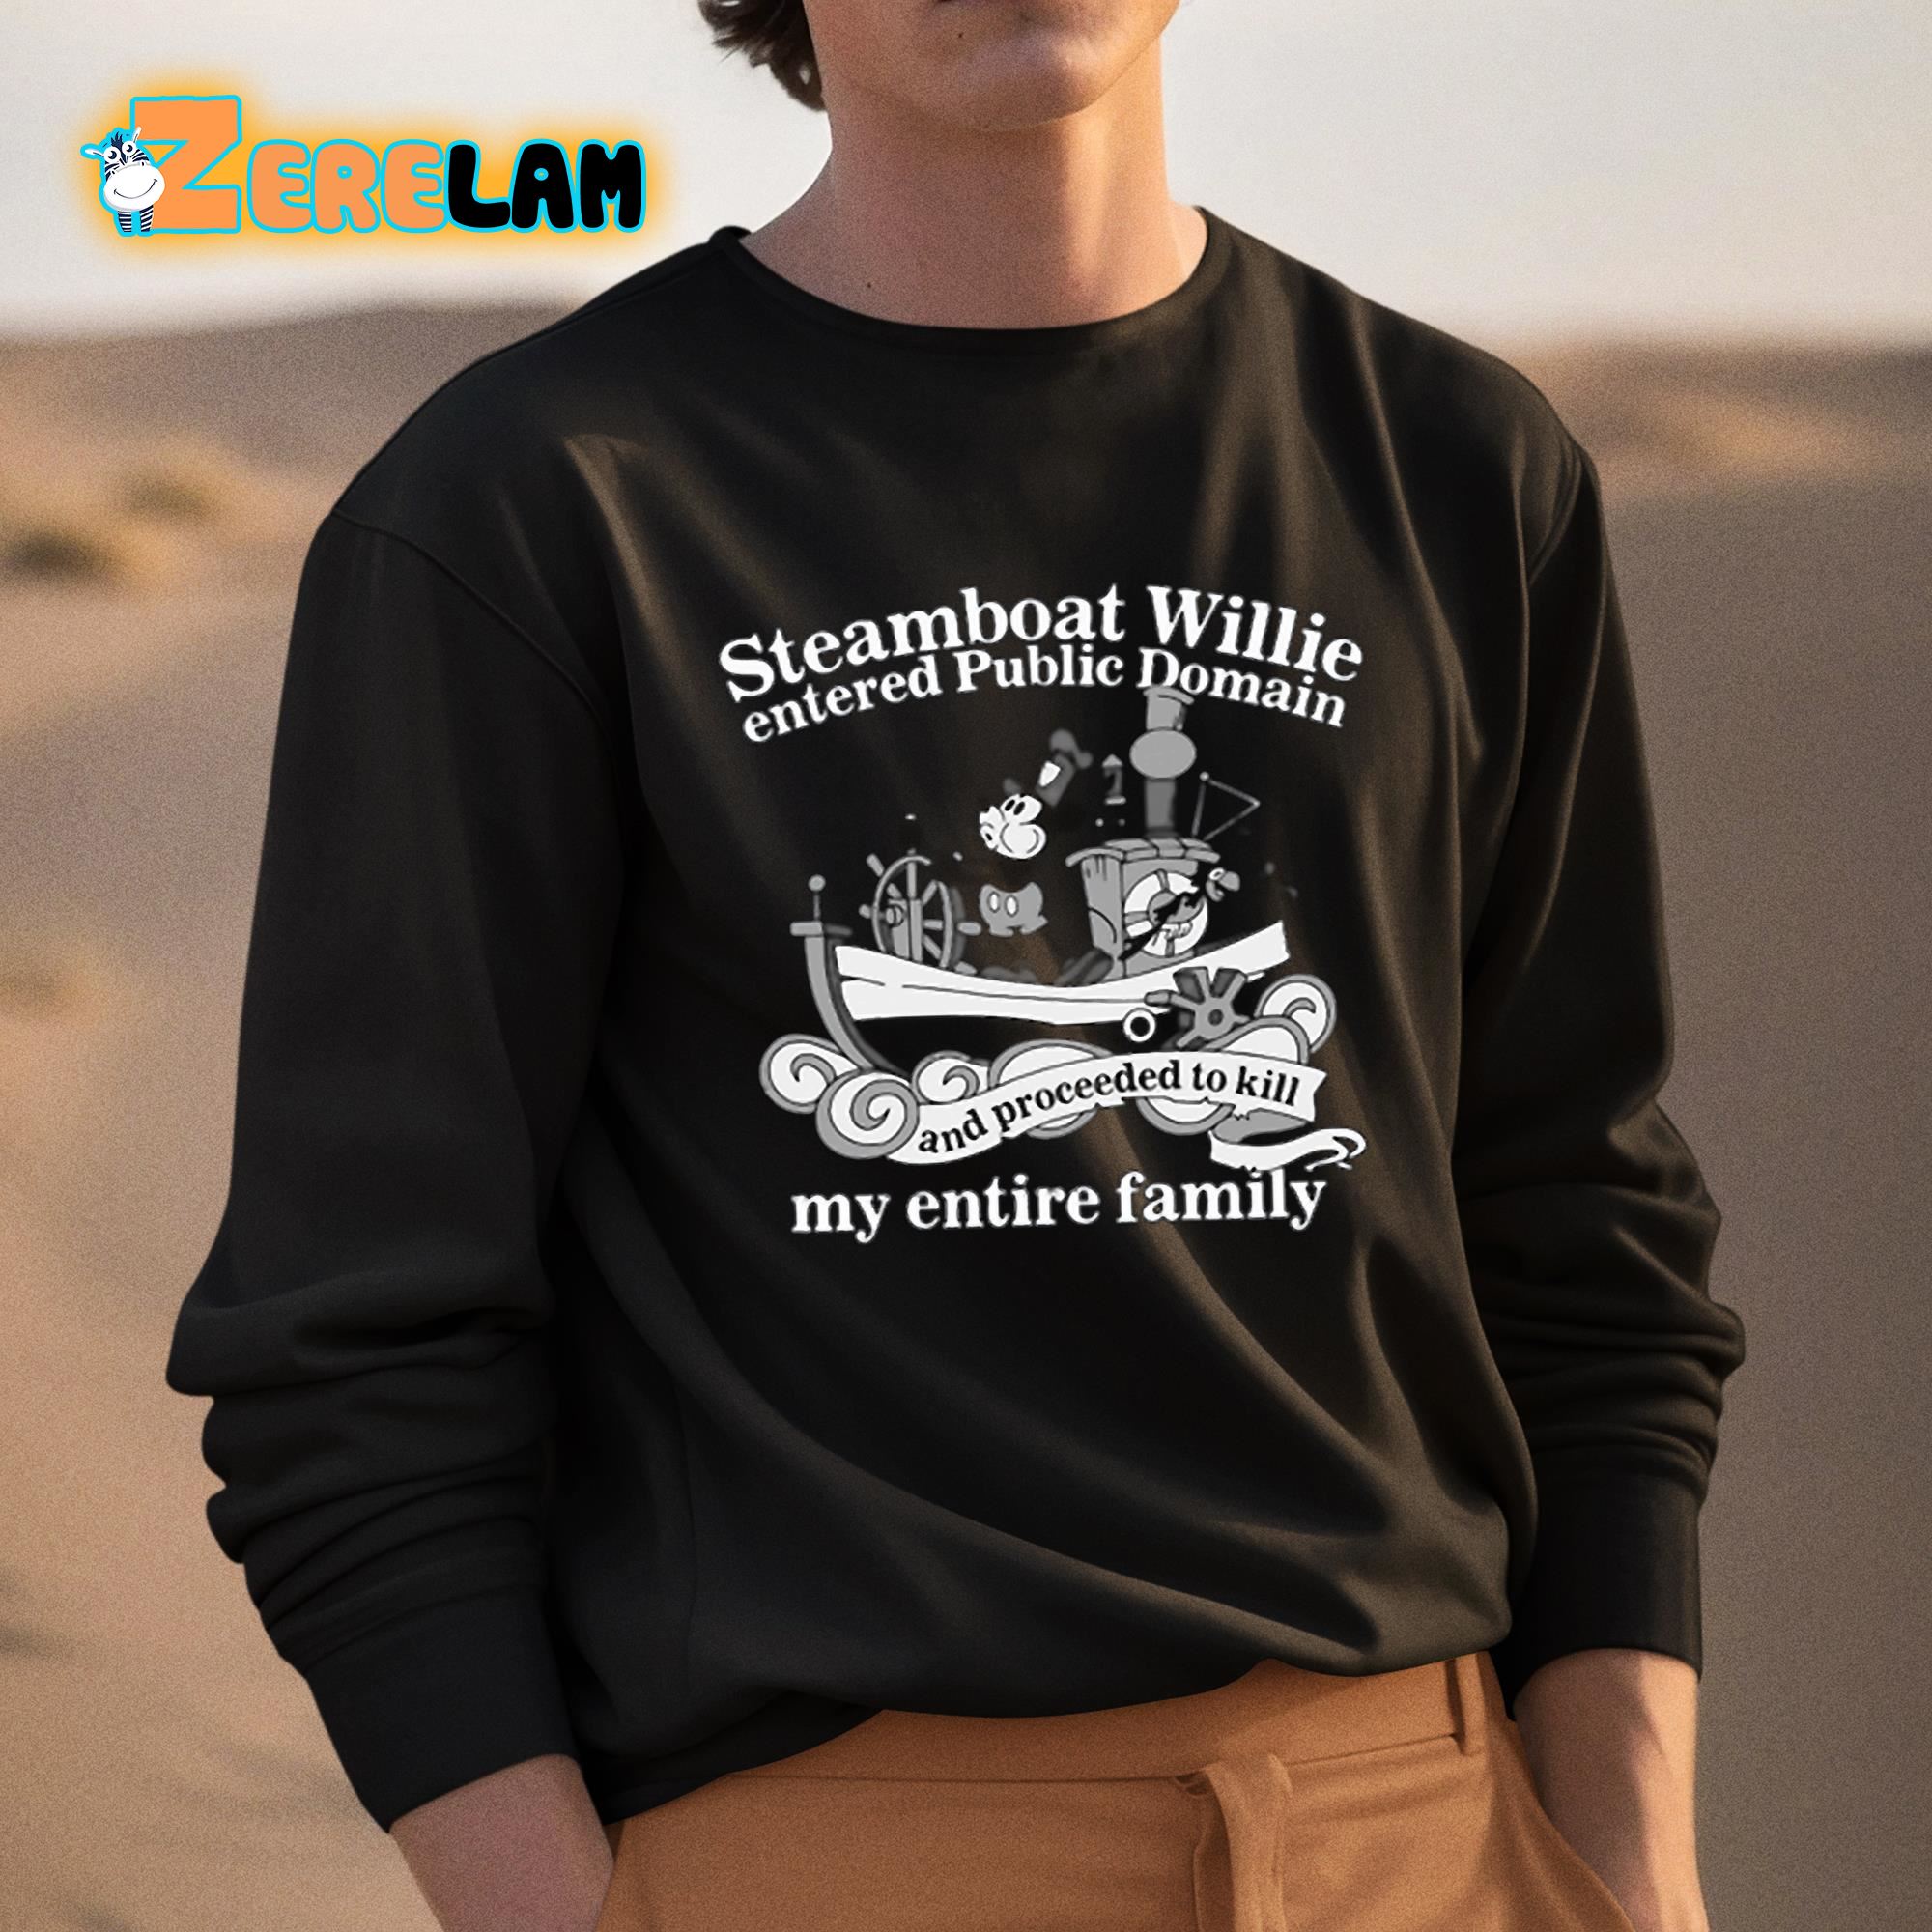 Steamboat Willie Entered Public Domain Shirt - Zerelam